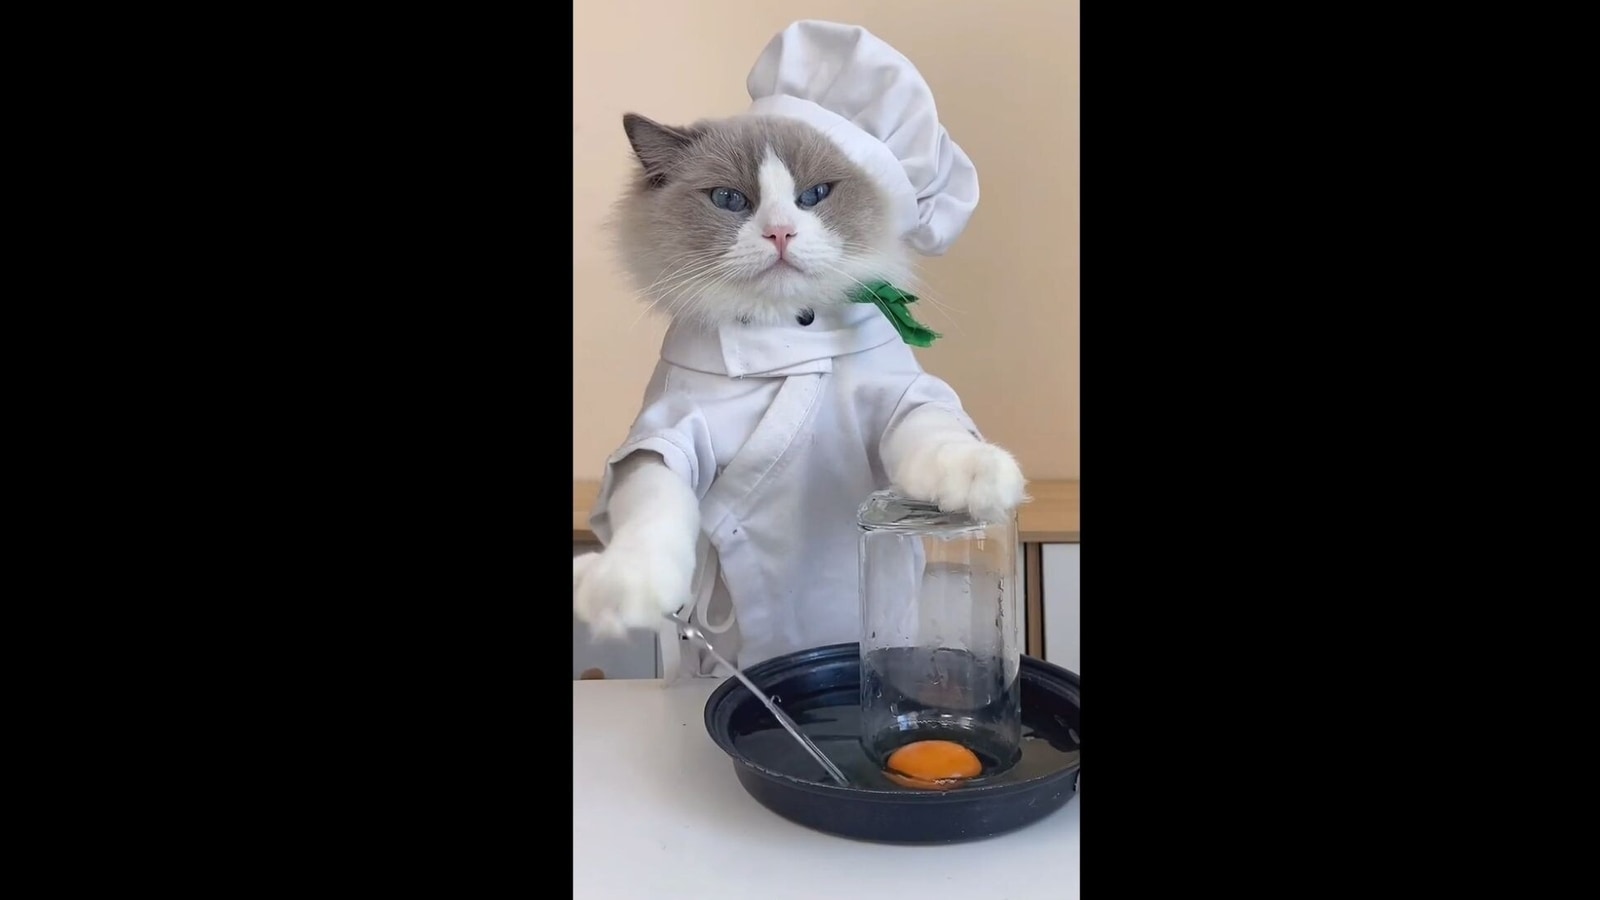 Chef\' cat on Instagram tries different food hacks, video impresses ...